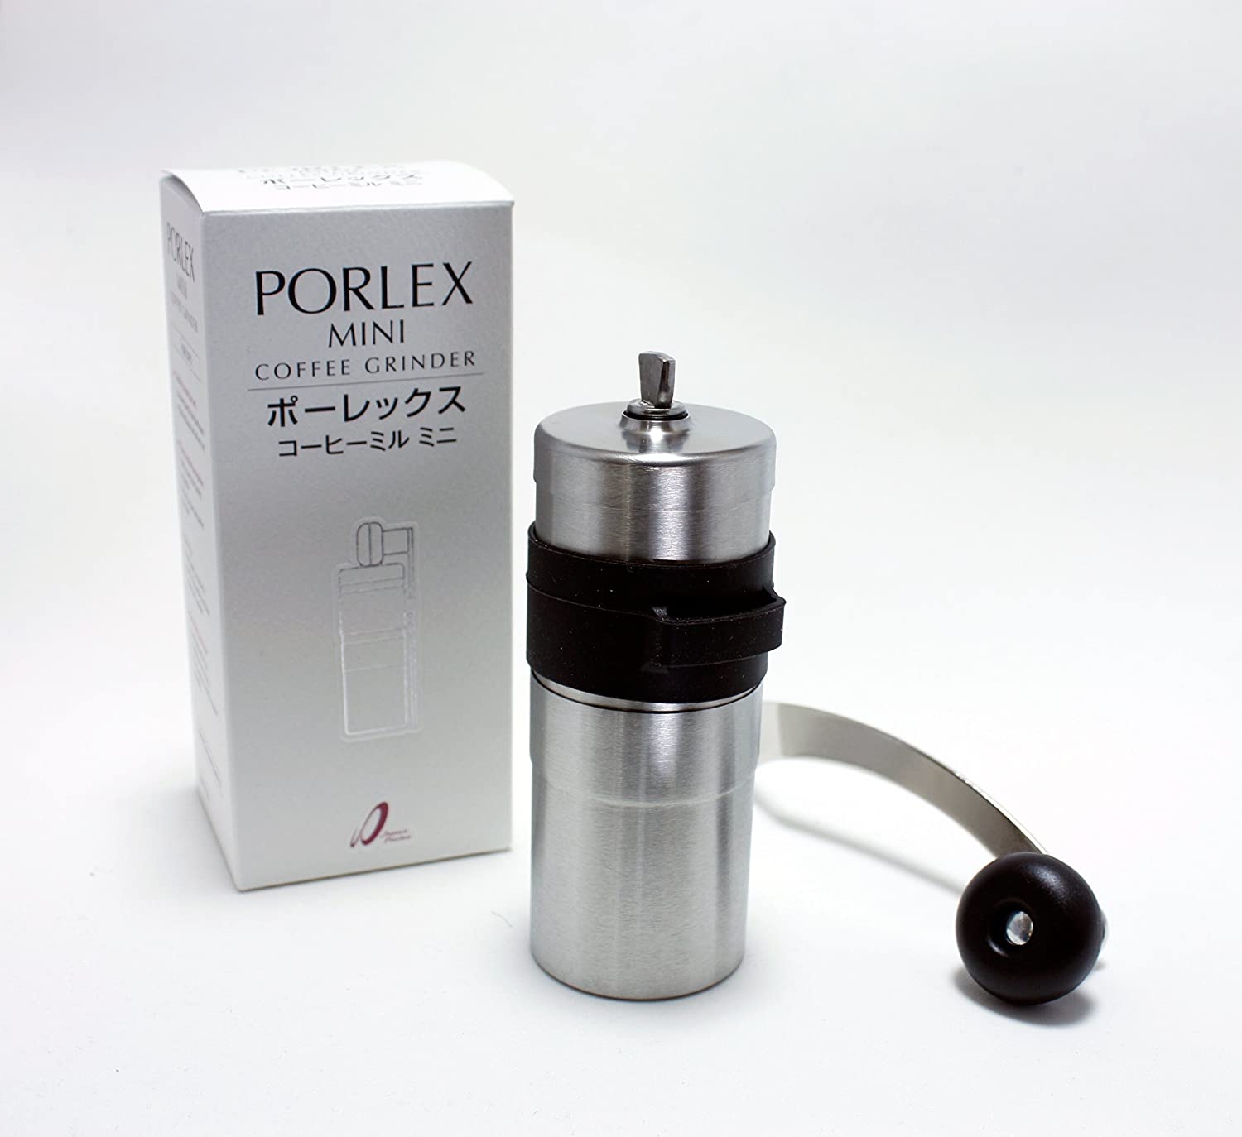 PORLEX(ポーレックス) コーヒーミル セラミック ミニの商品画像7 